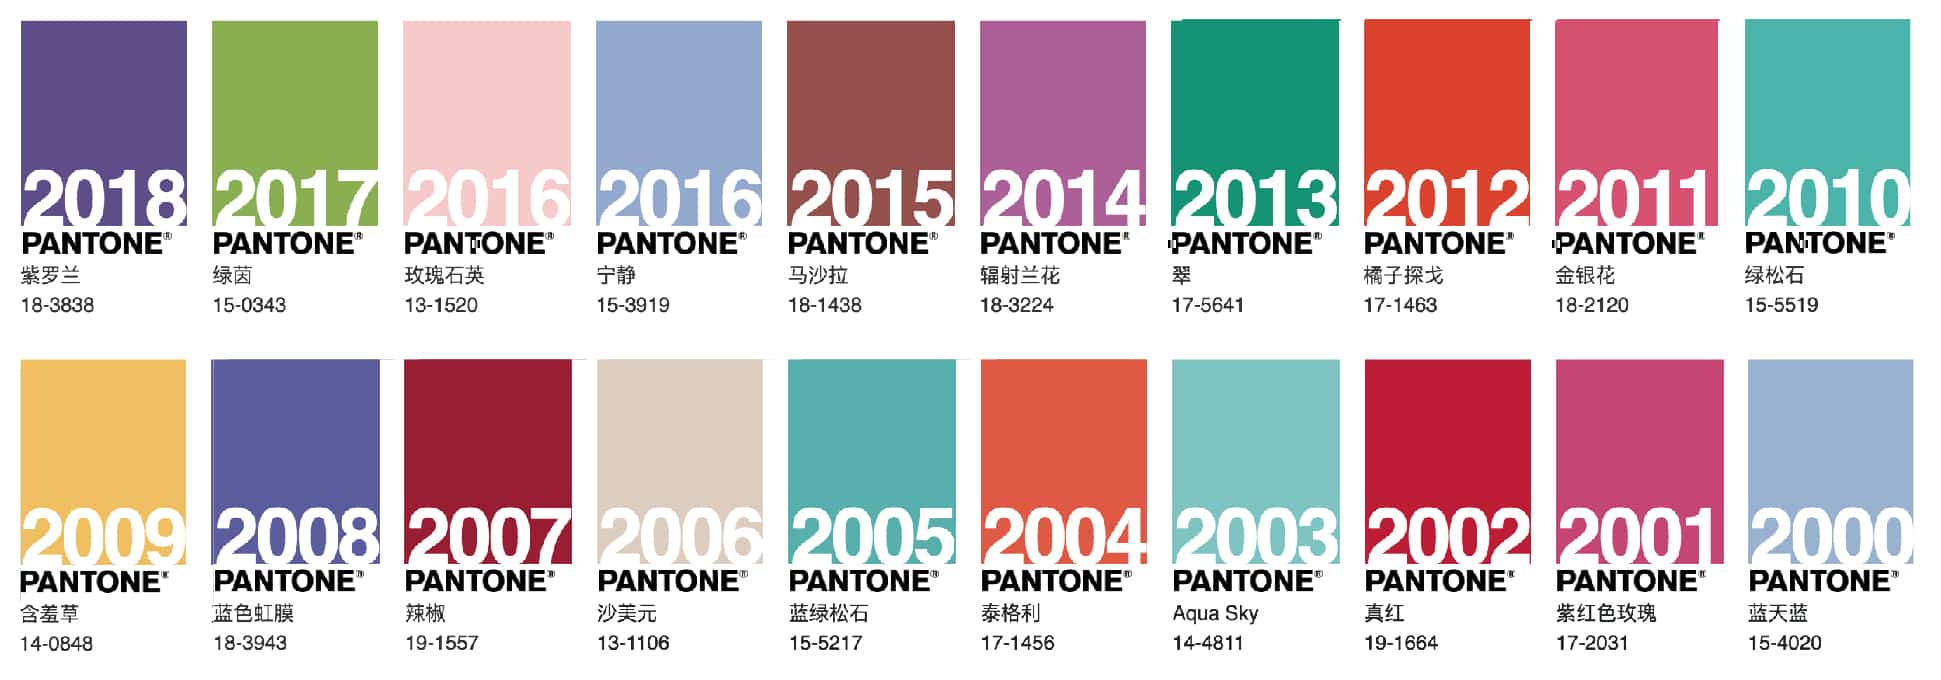 2010 год какой цвет. Пантон цвета 2000-2022. Pantone палитра 2000-2022. Институт цвета Pantone. Pantone цвет года.